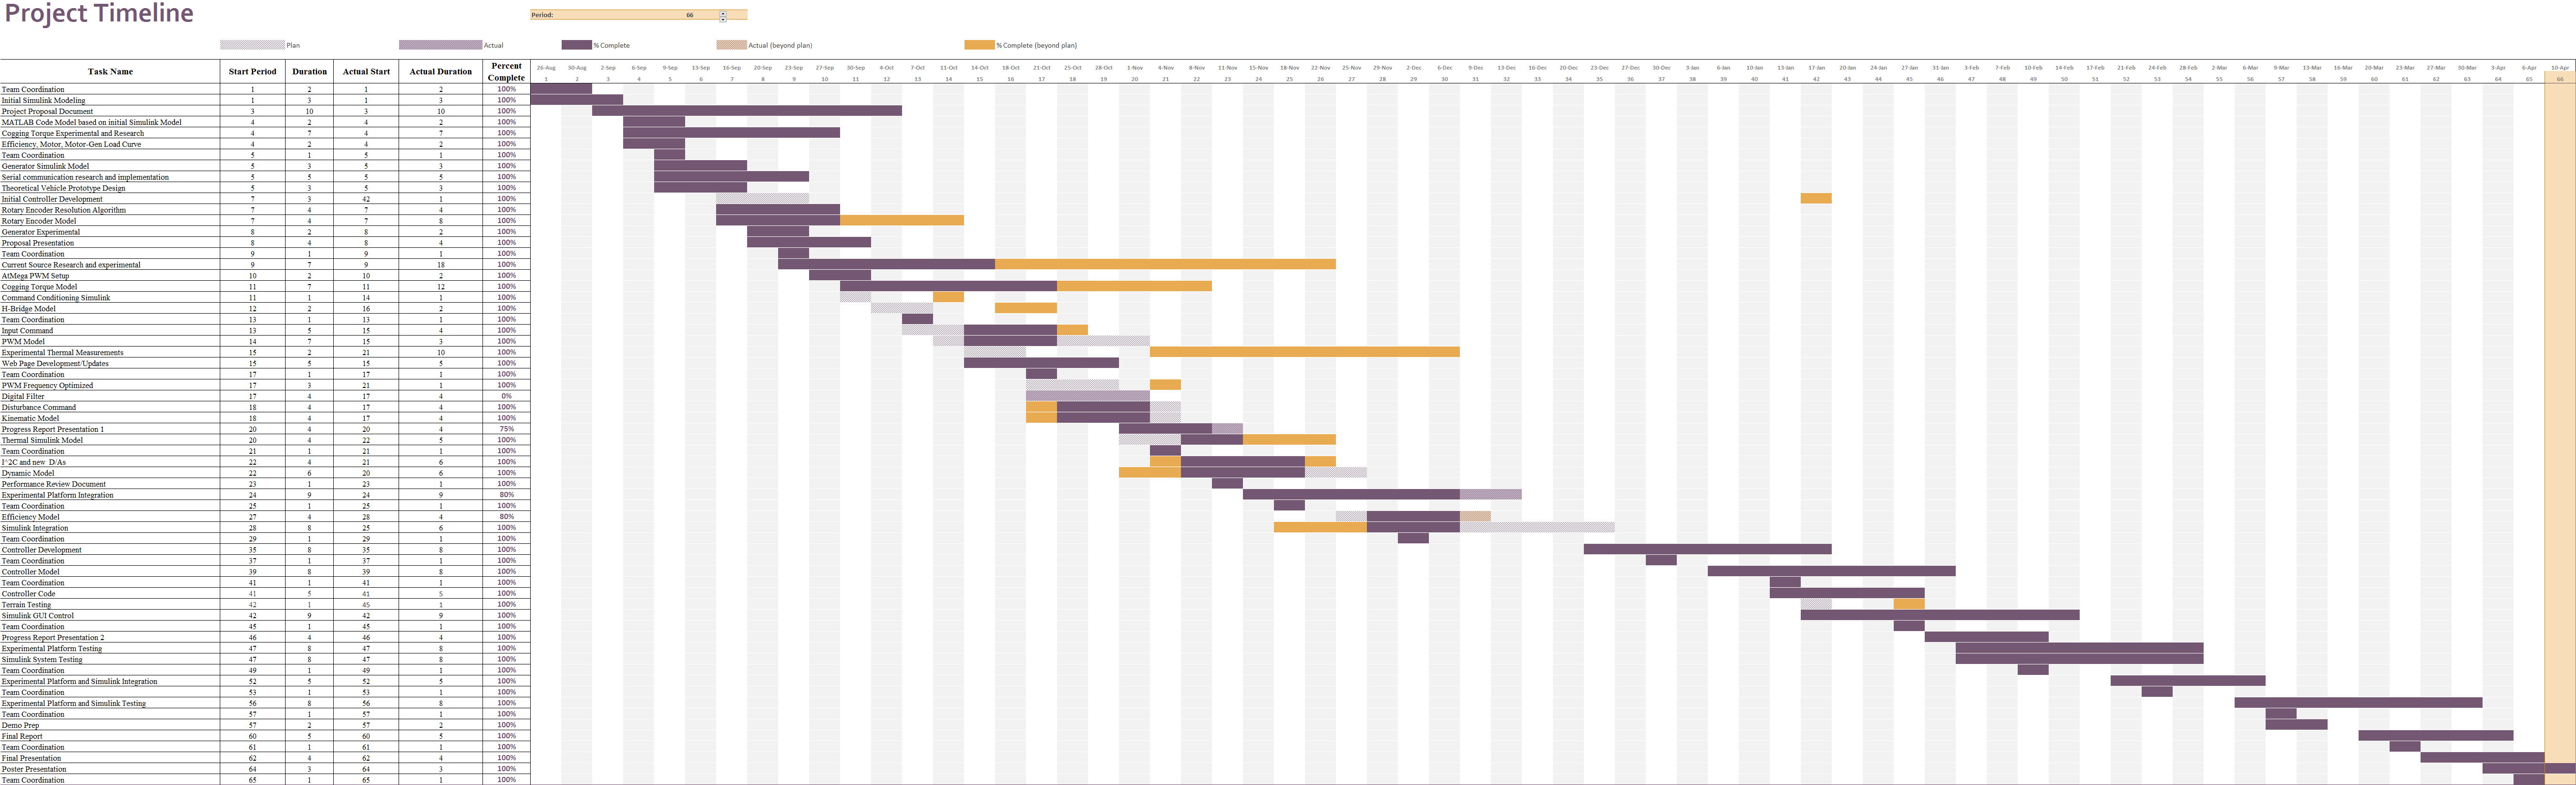 Project Gantt Chart as of 5/03/16